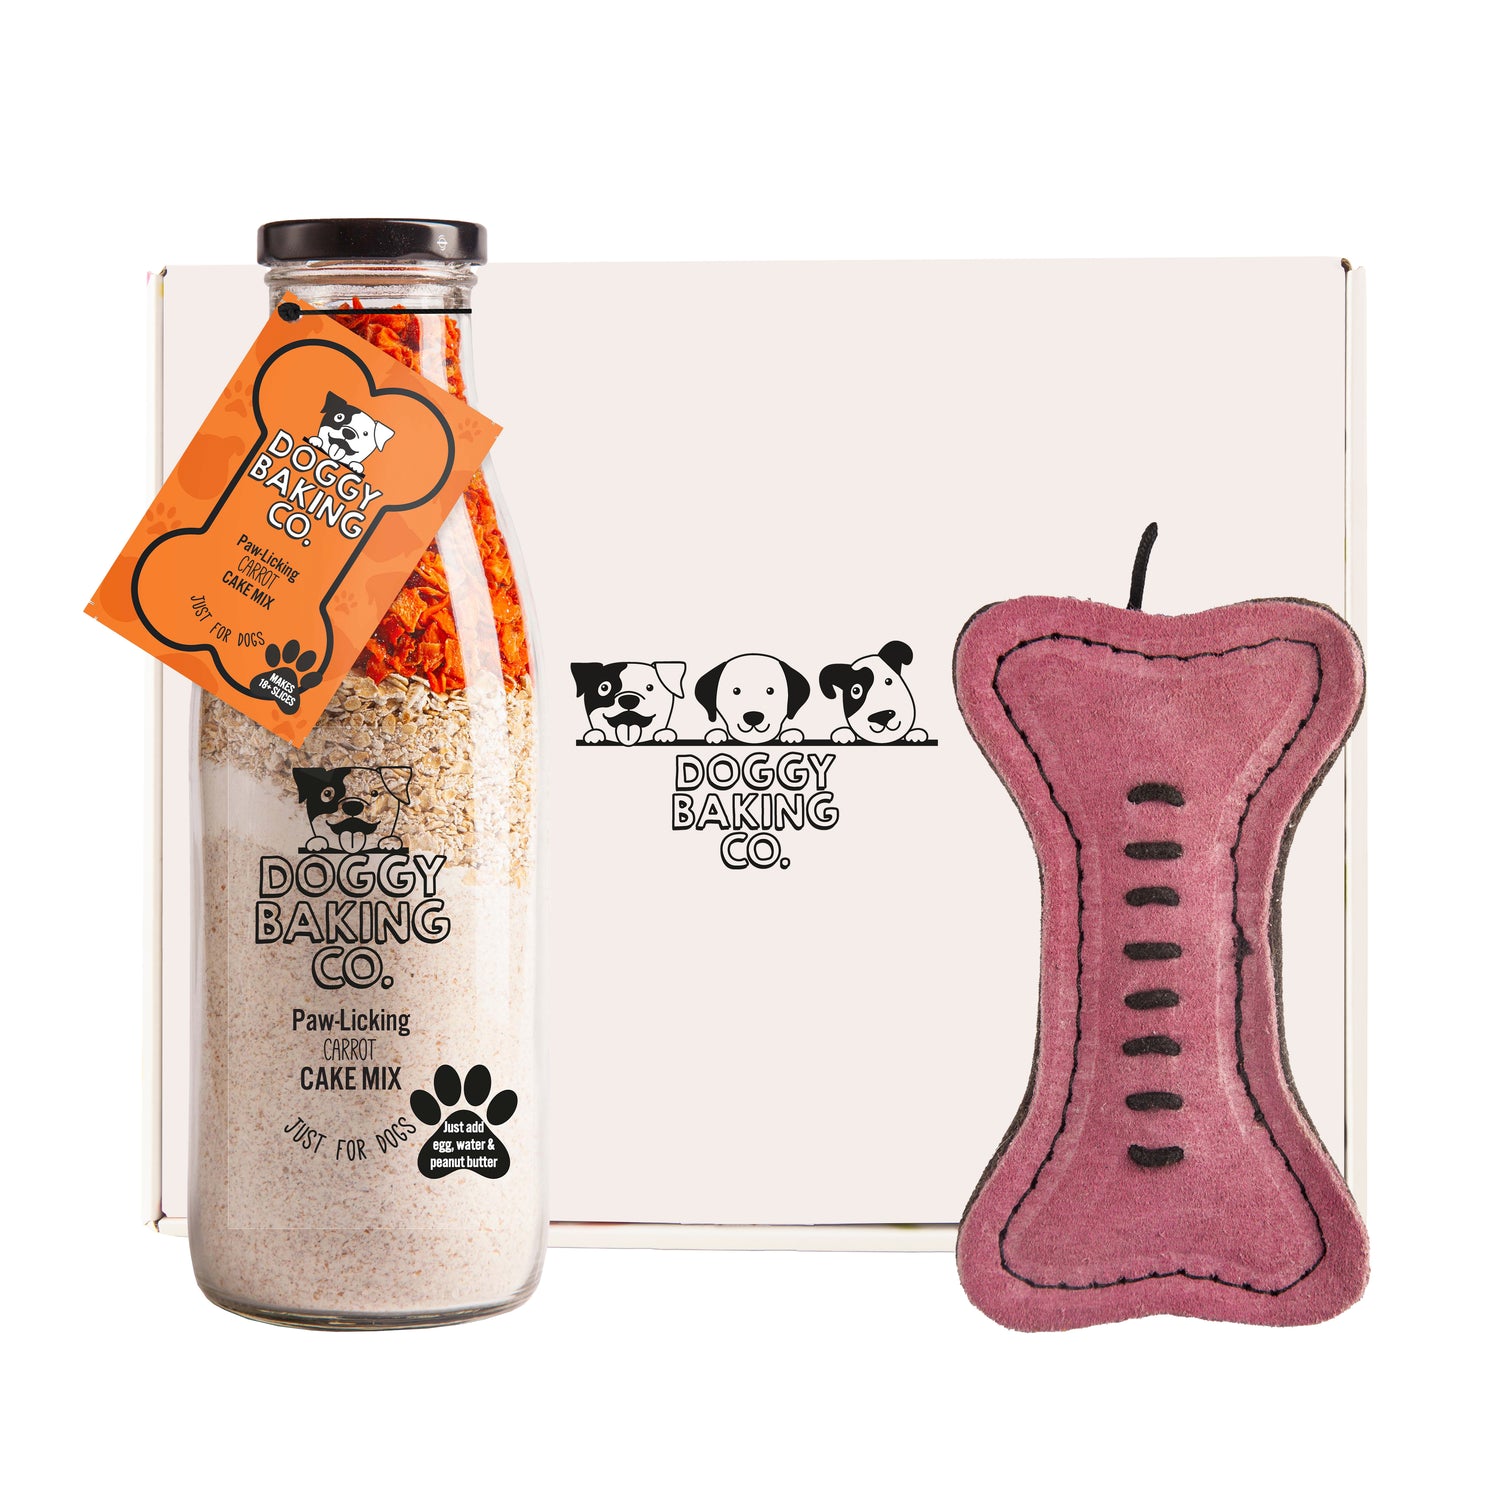 Carrot Cake Mix & Pinkie Bone Eco Toy Gift box - Doggy Baking Co by The Bottled Baking Co